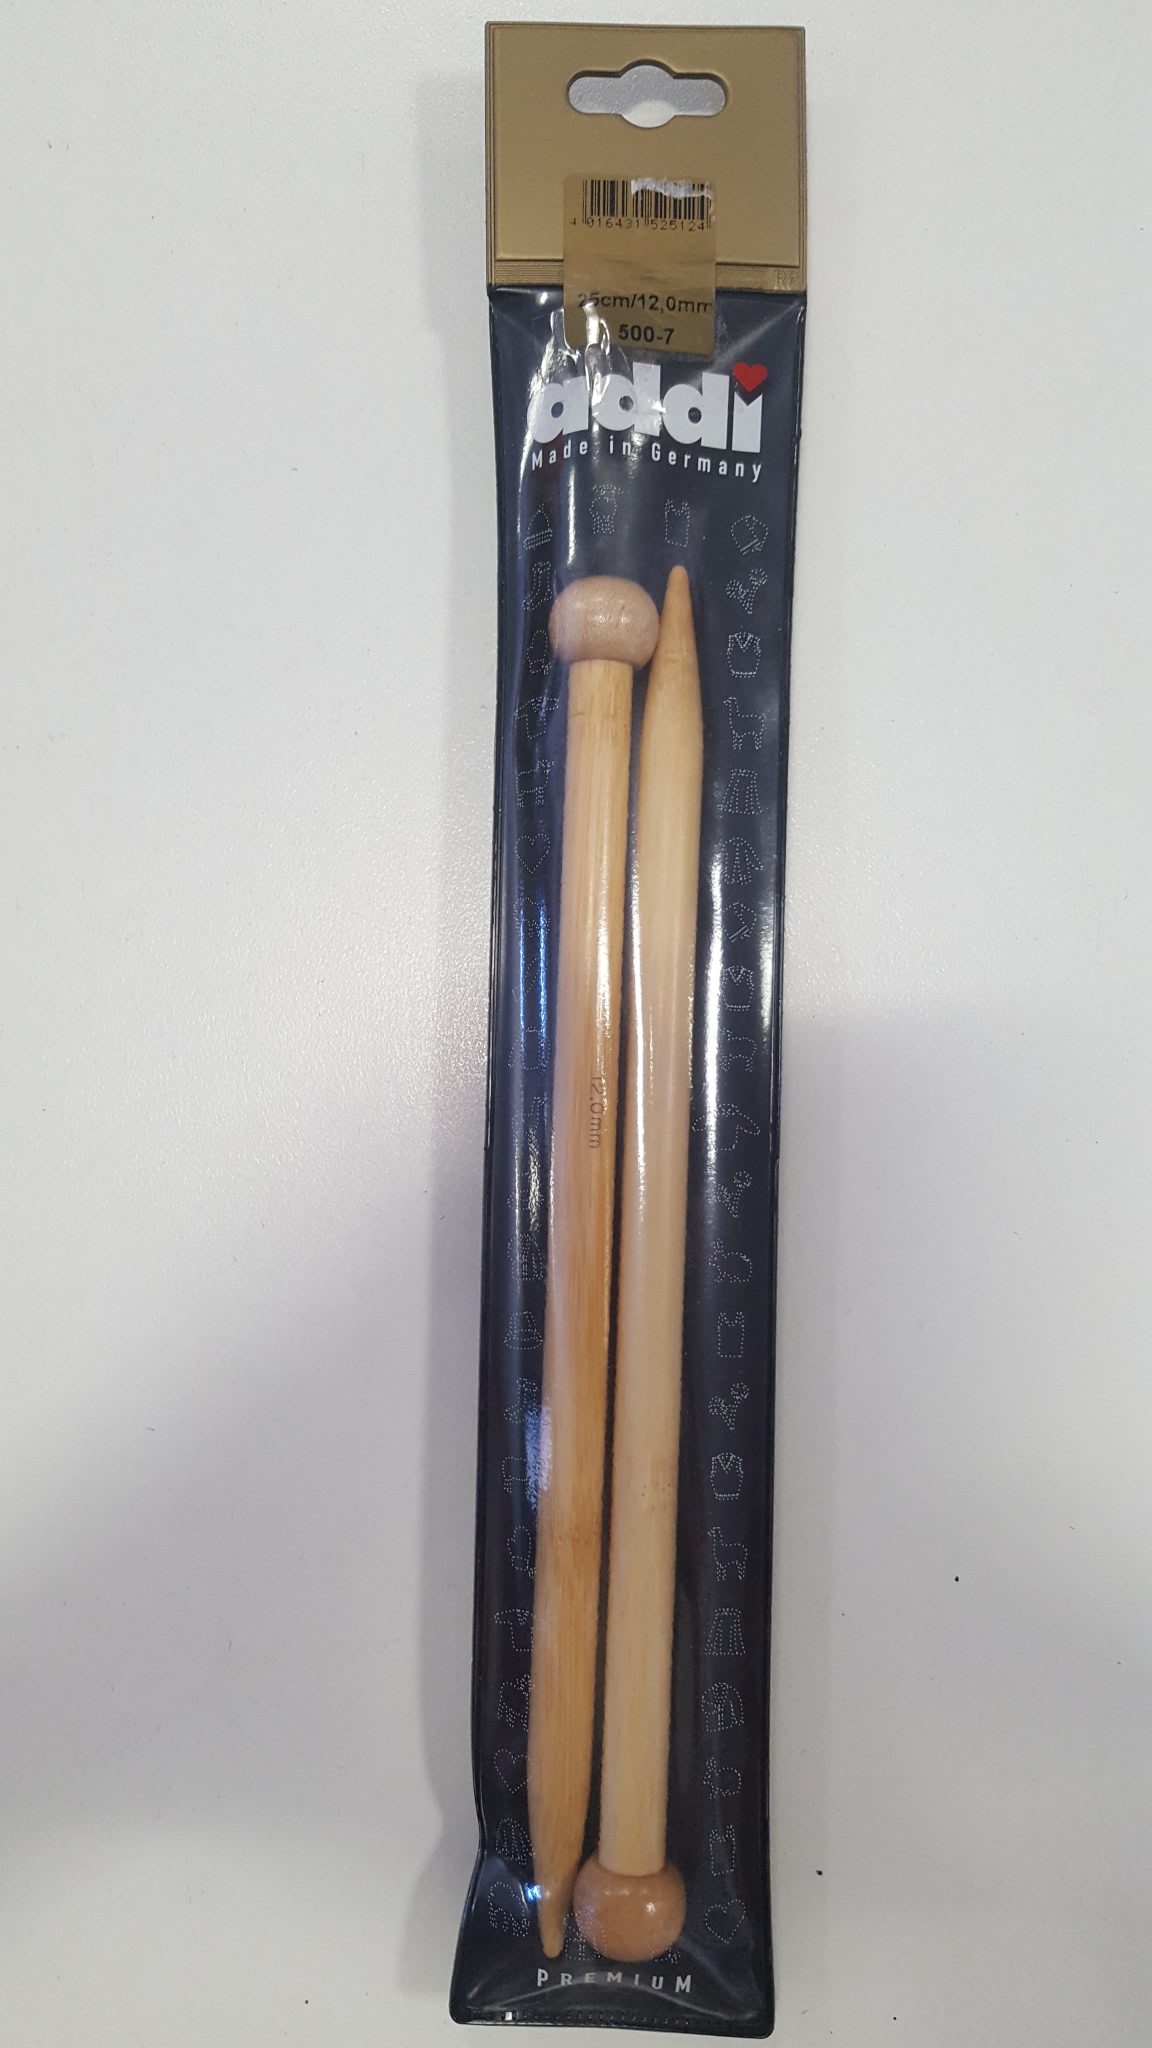 Addi bamboo needles 25cm - 8-12mm